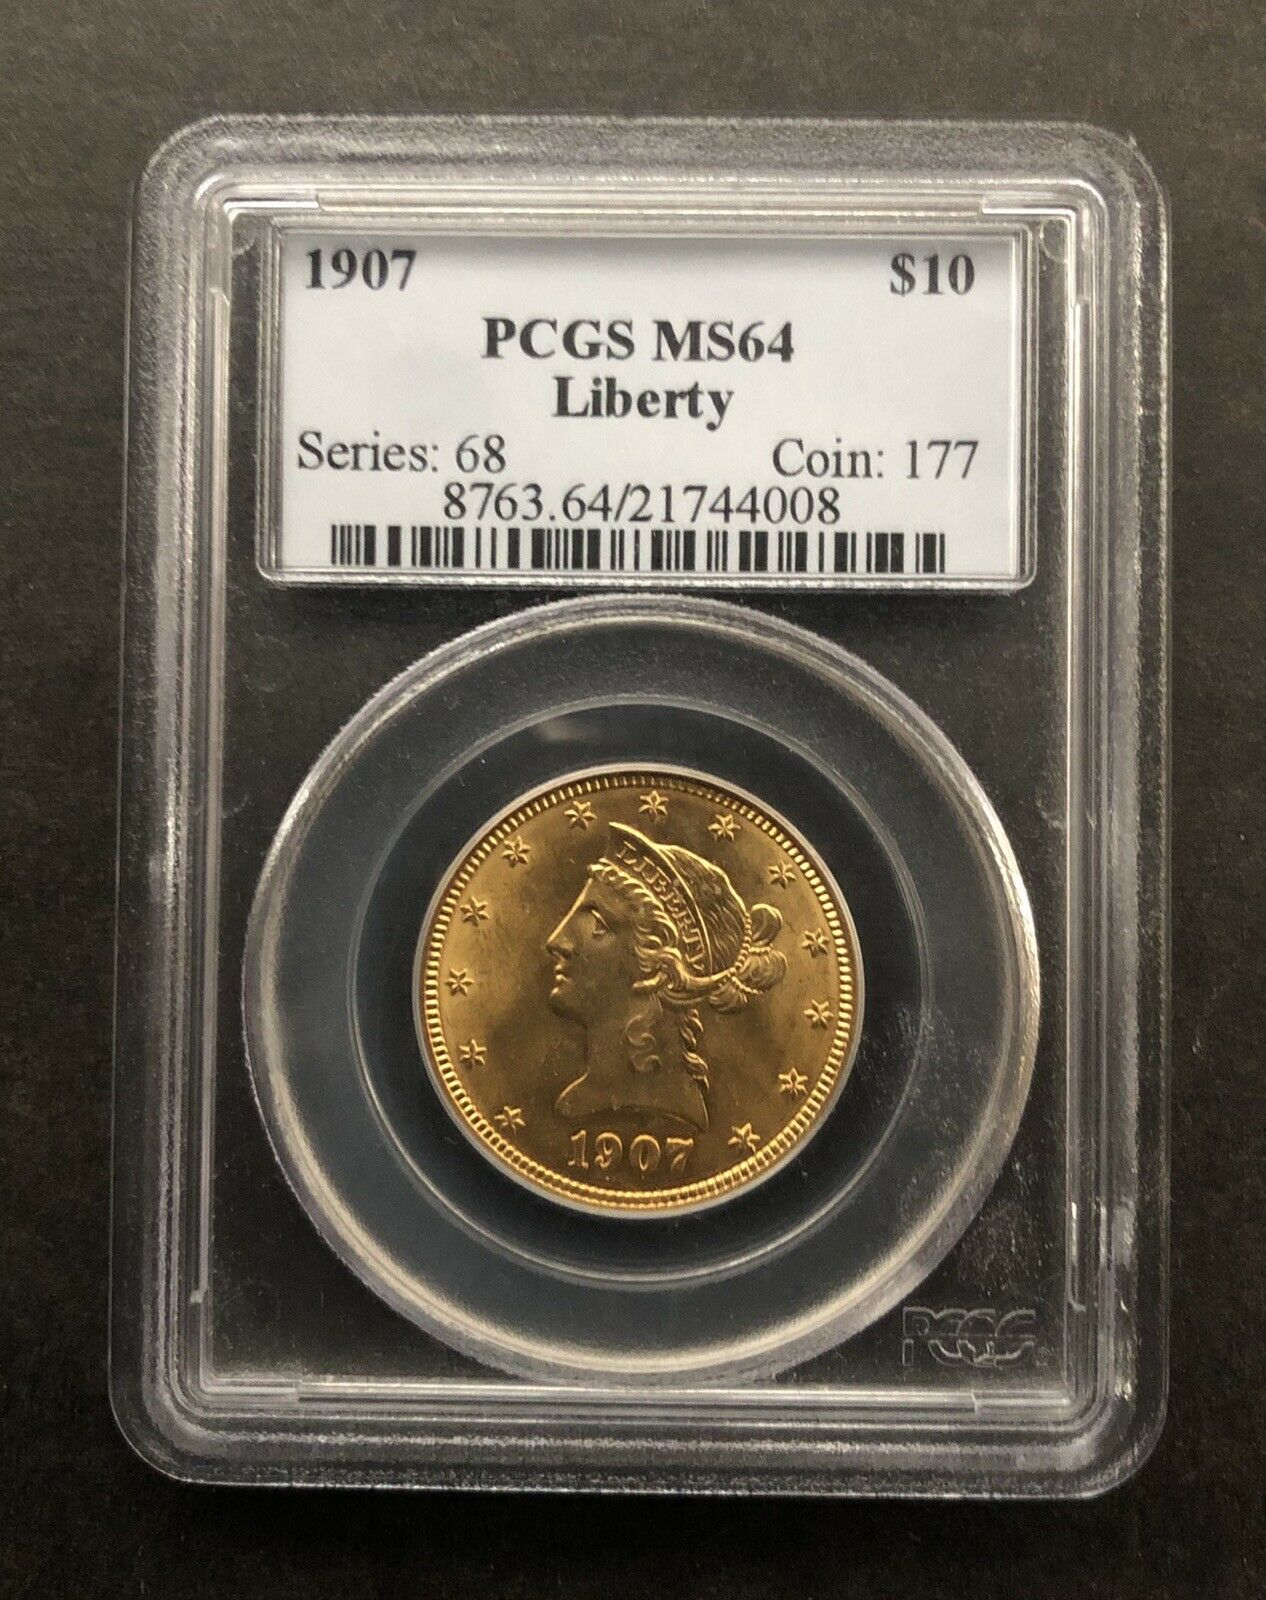 1907 Liberty $10 Pcgs Ms64 - Liberty Eagle Coronet Motto- Us Gold- Hard Money